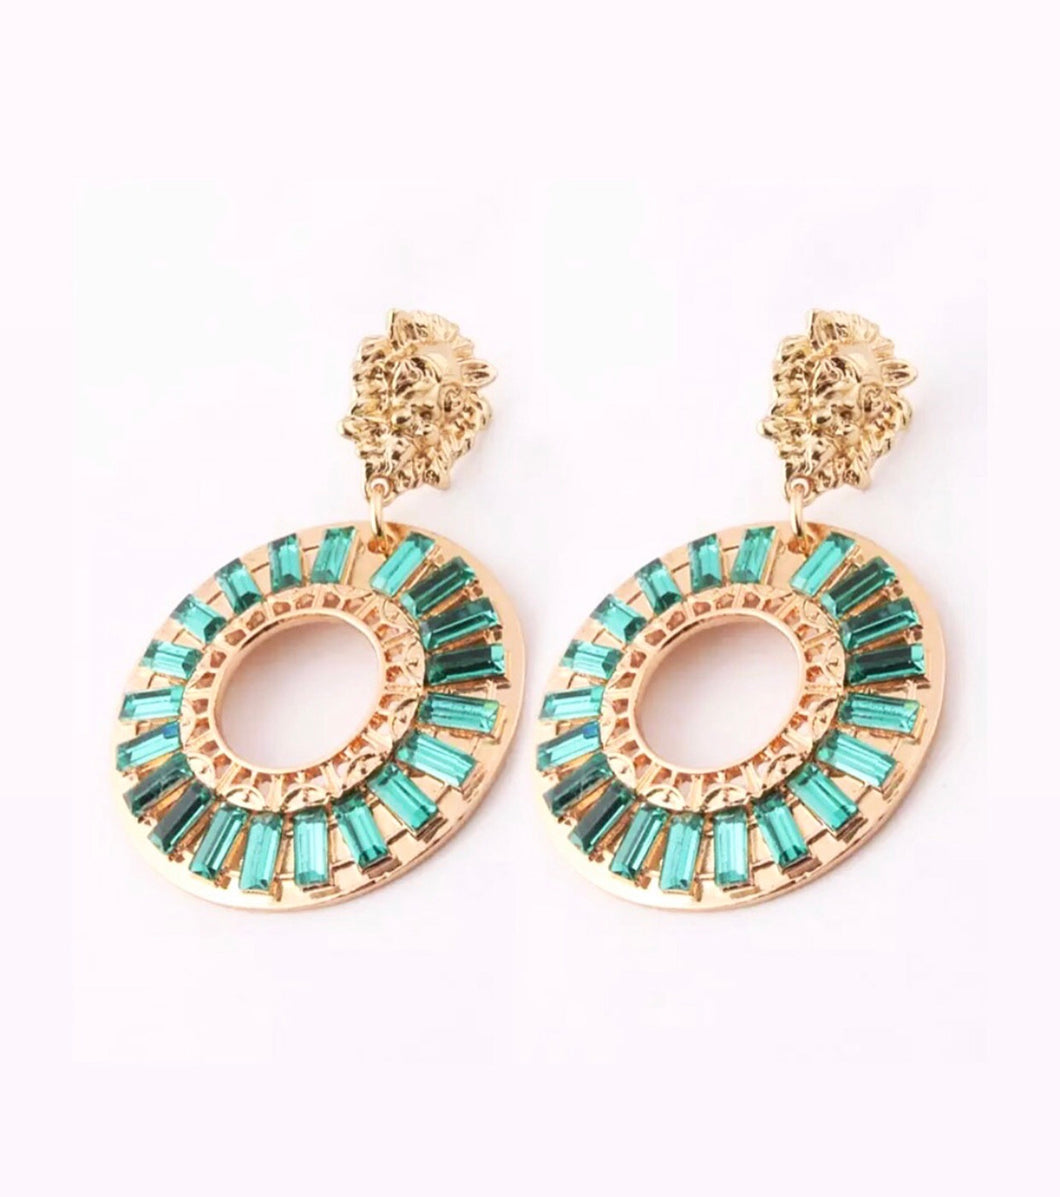 Lion turquoise rhinestone earrings